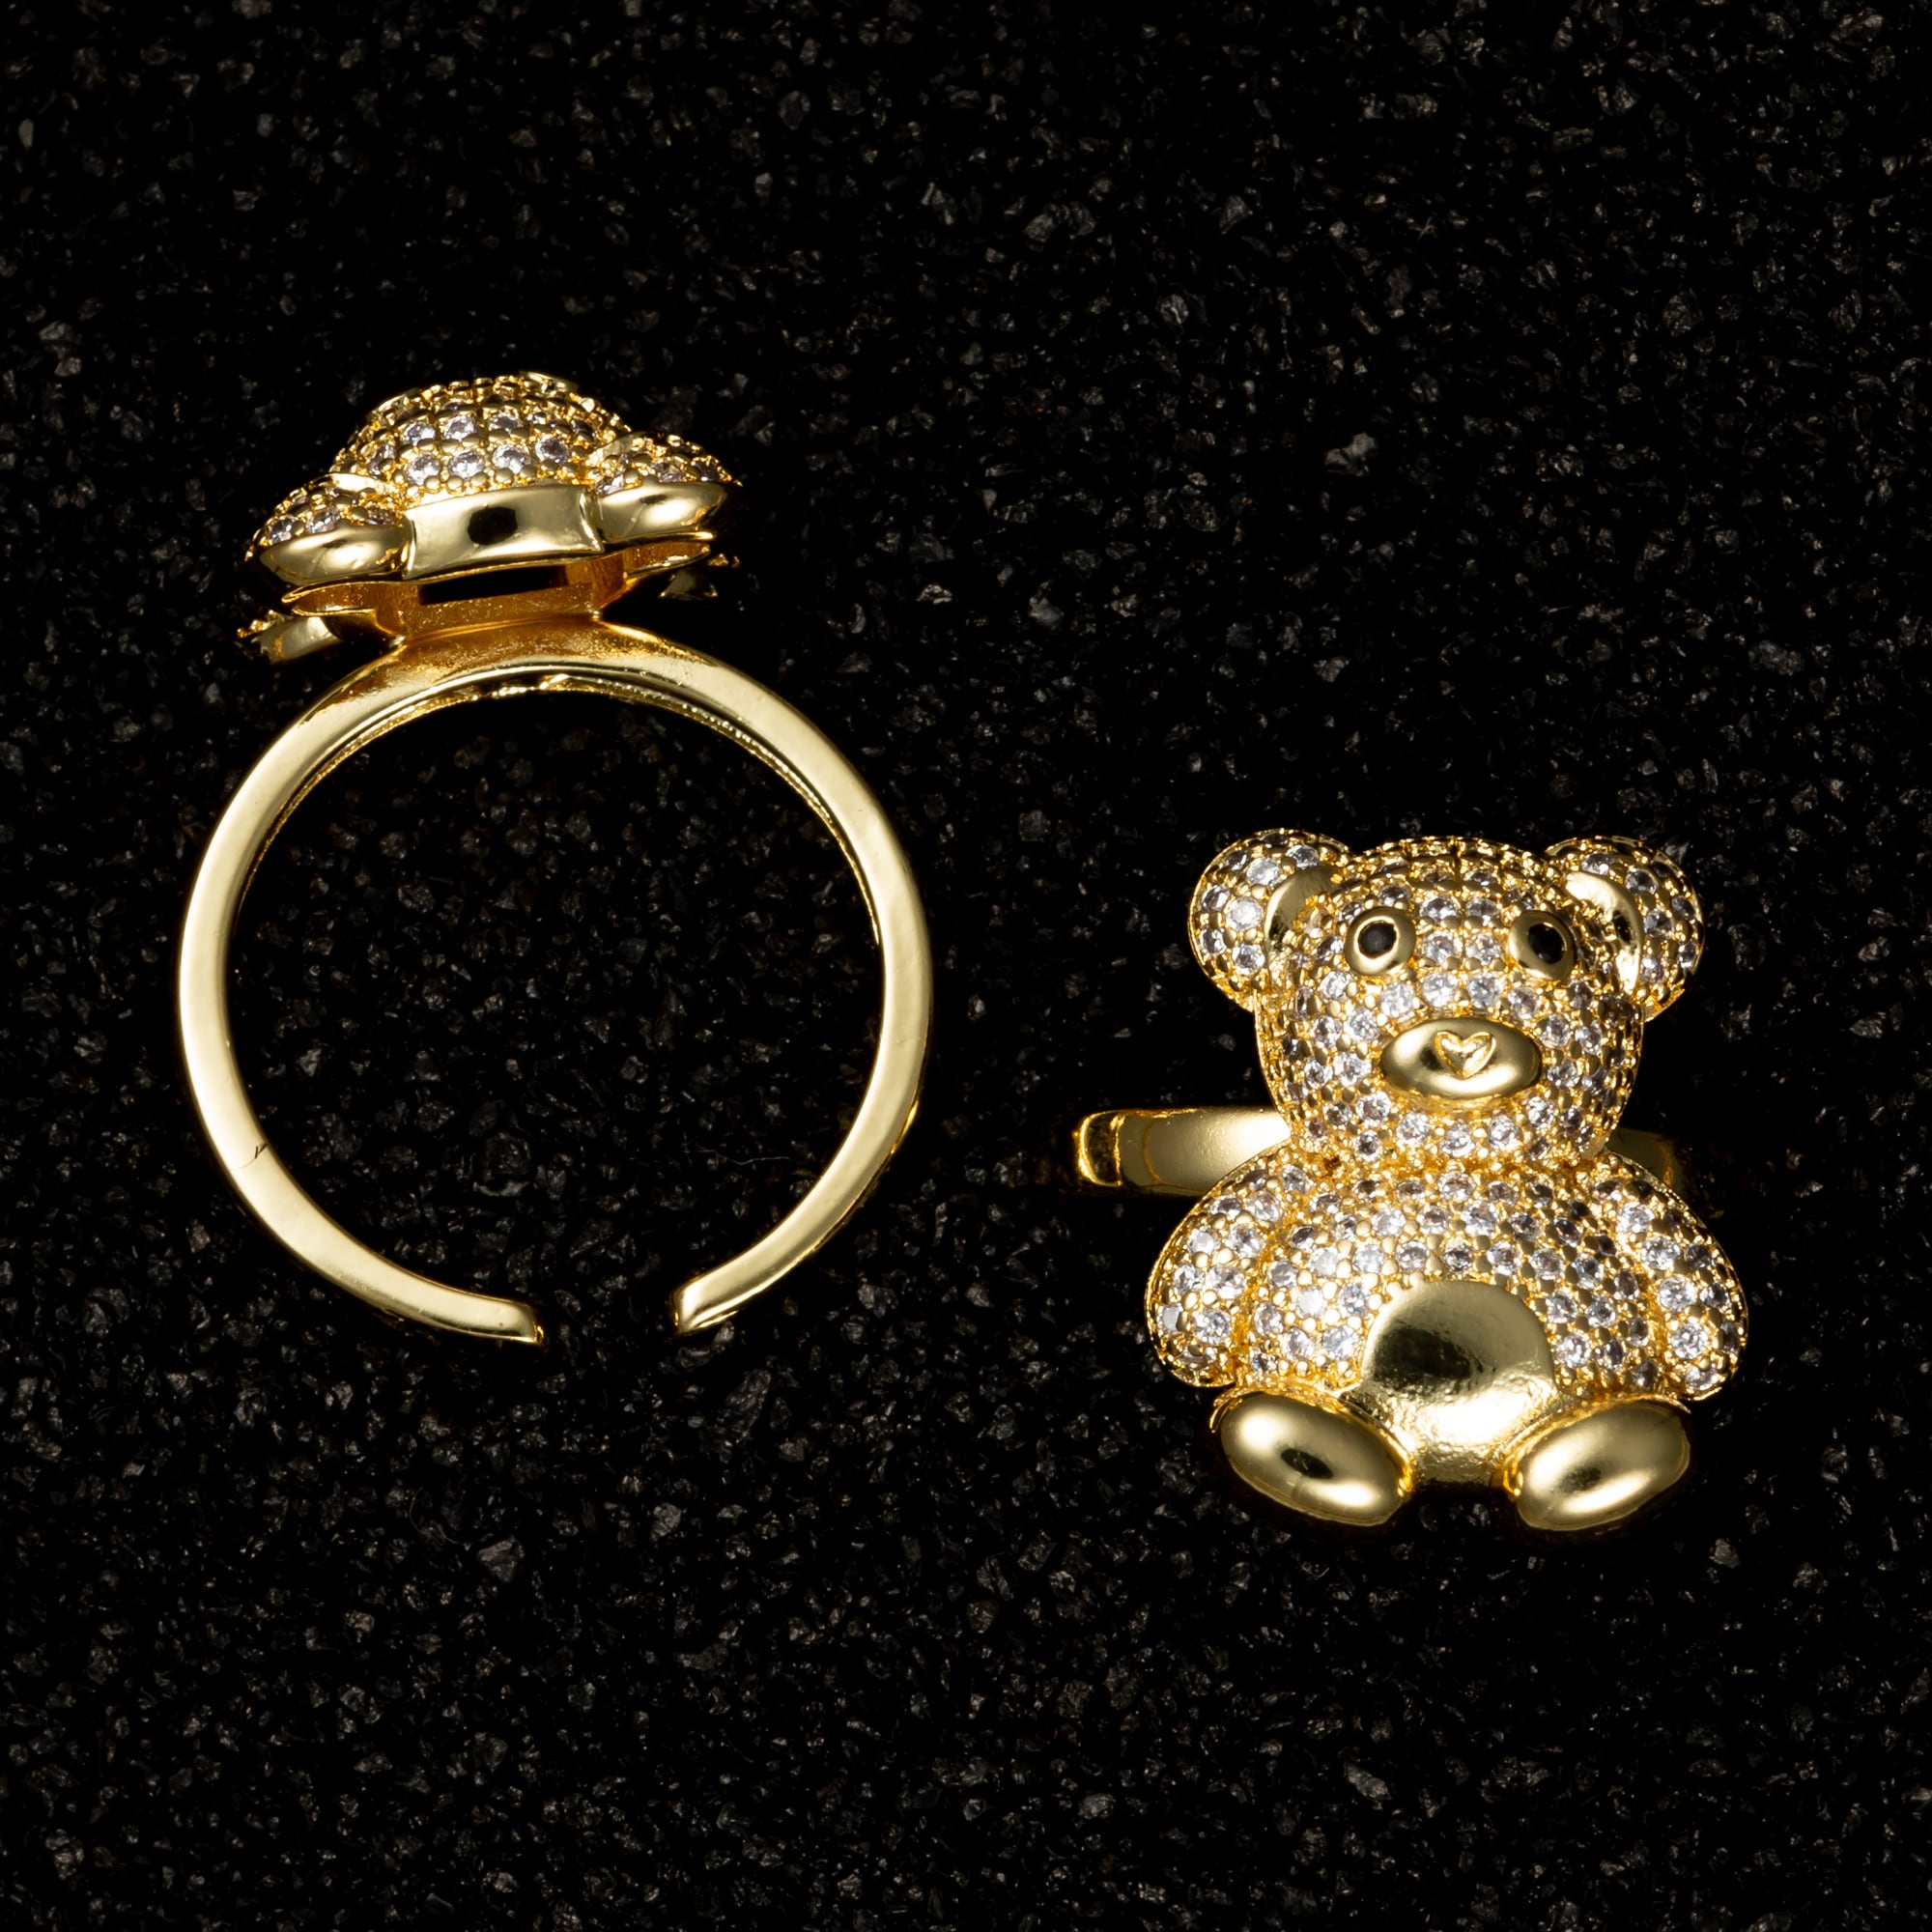 Teddy Bear Ring with Gemstones - Rings